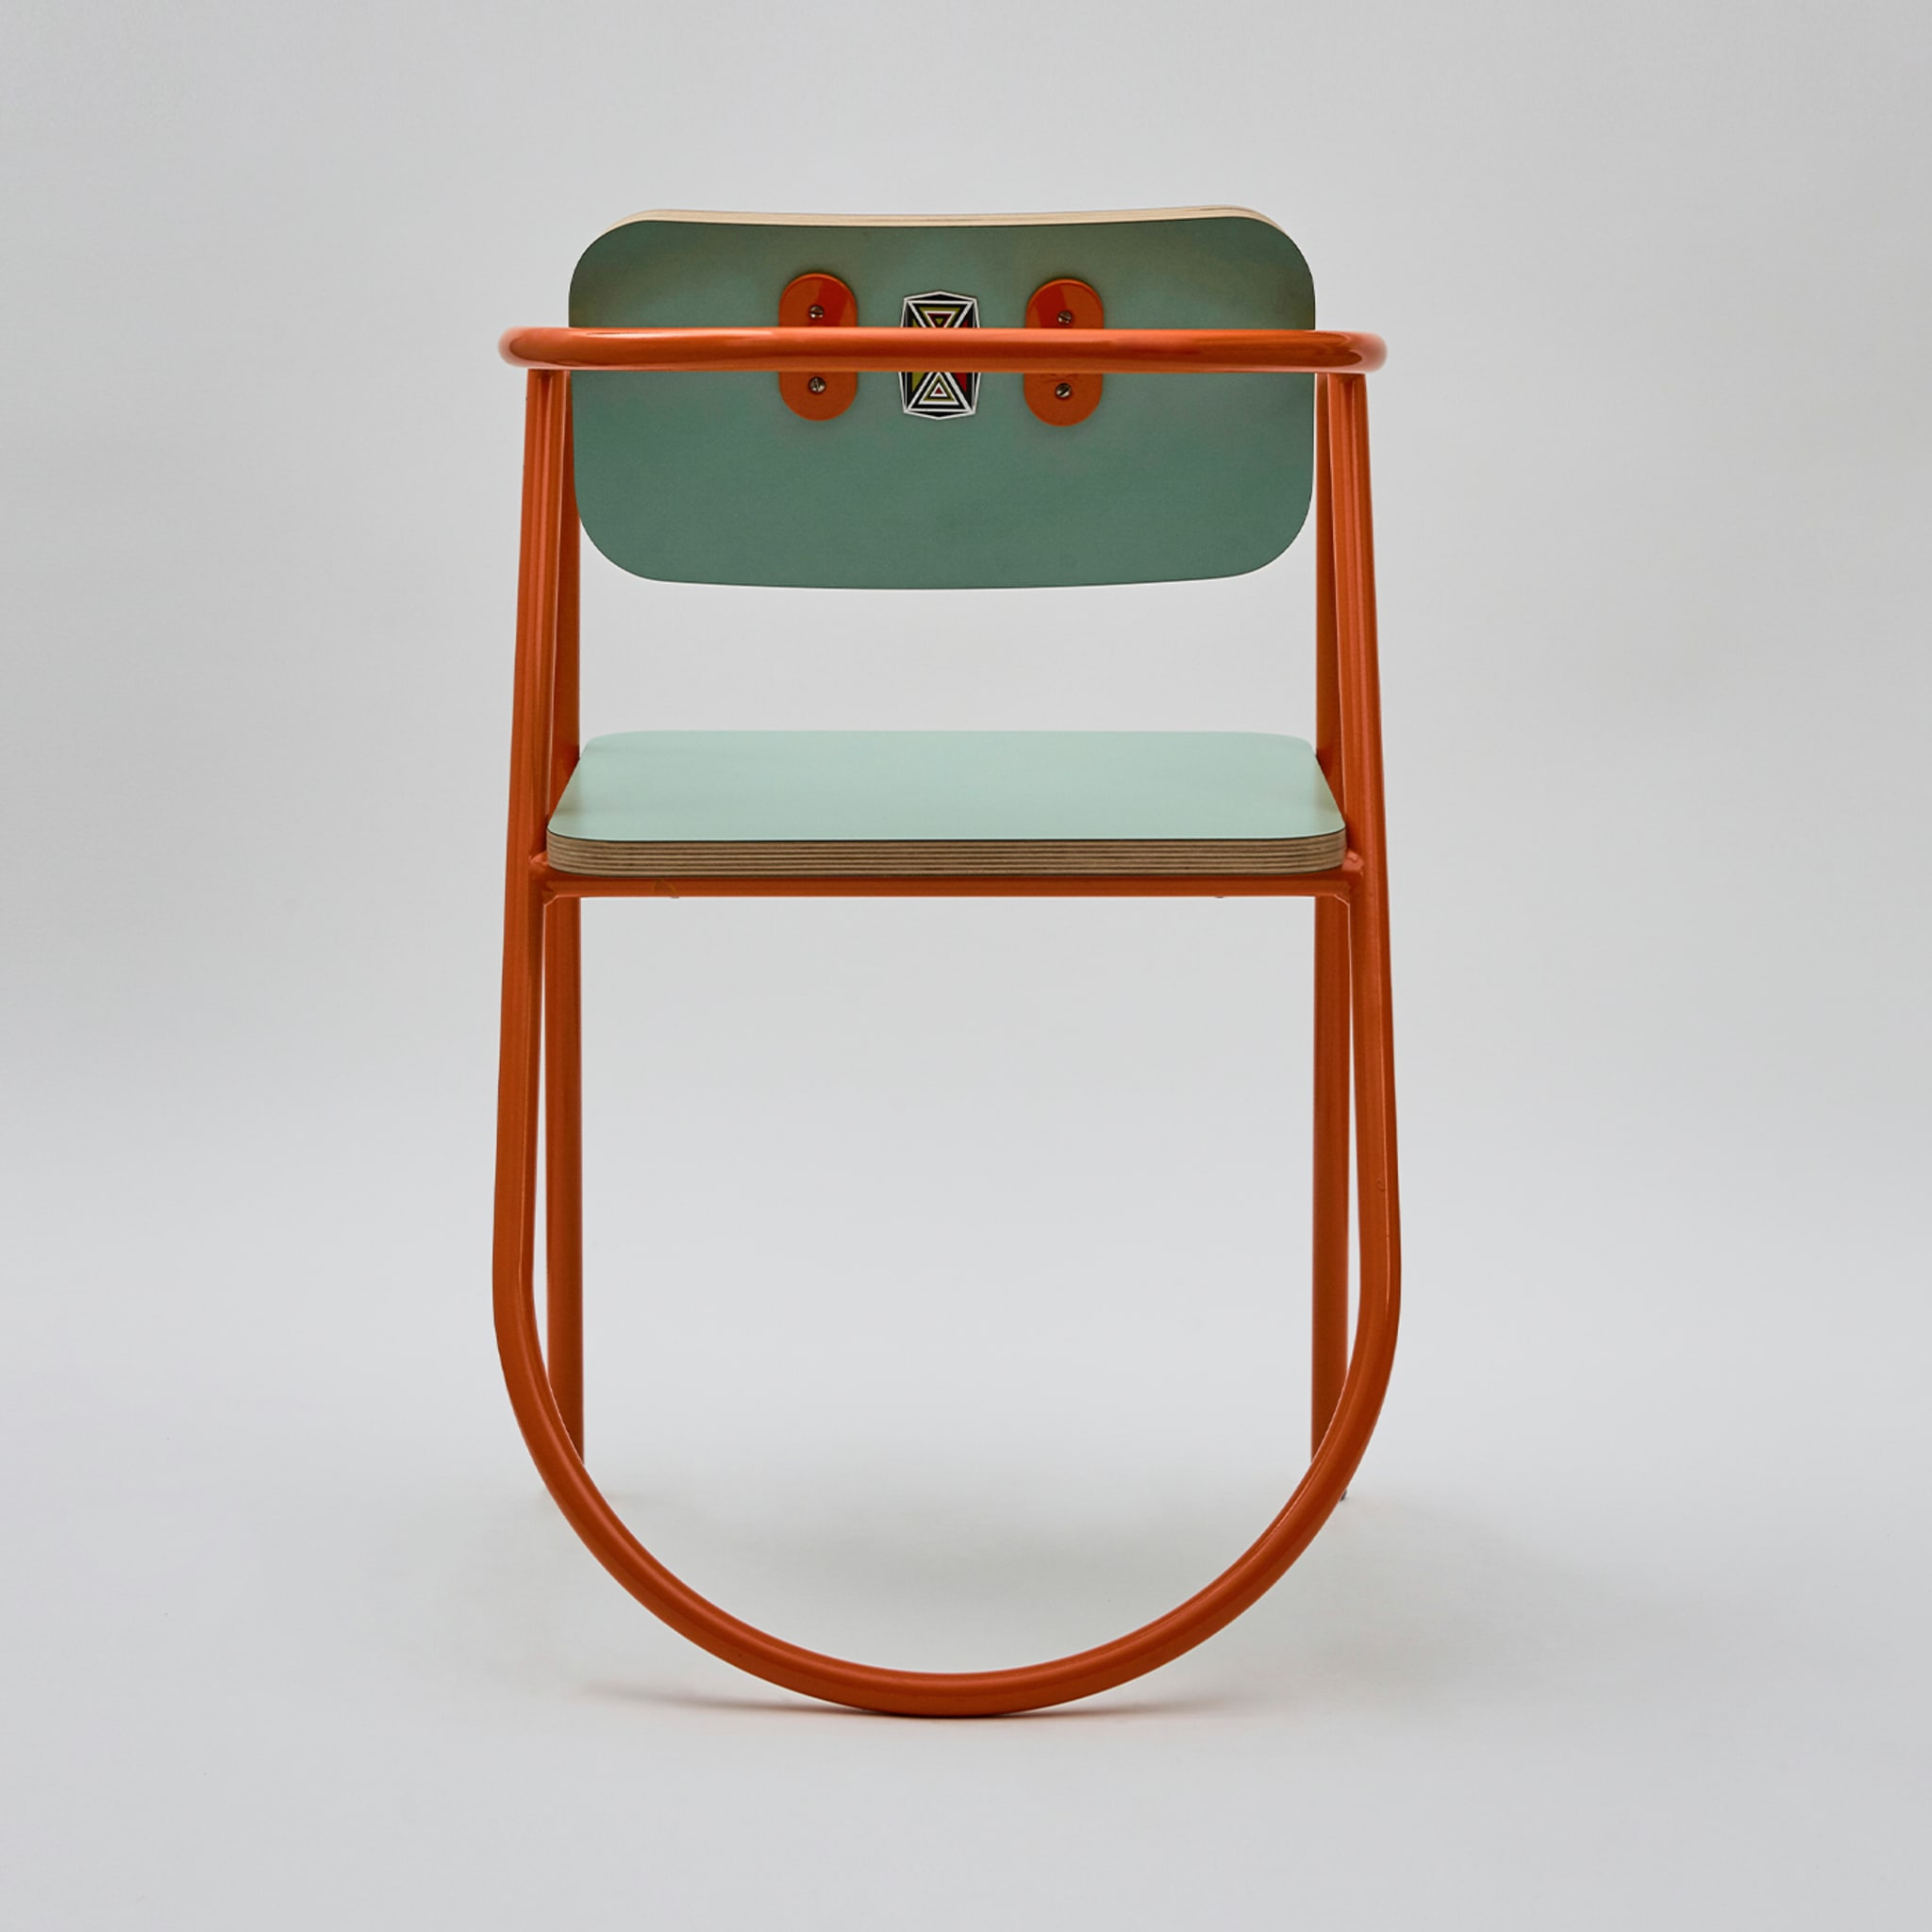 La Misciù Orange & Teal Chair - Alternative view 2